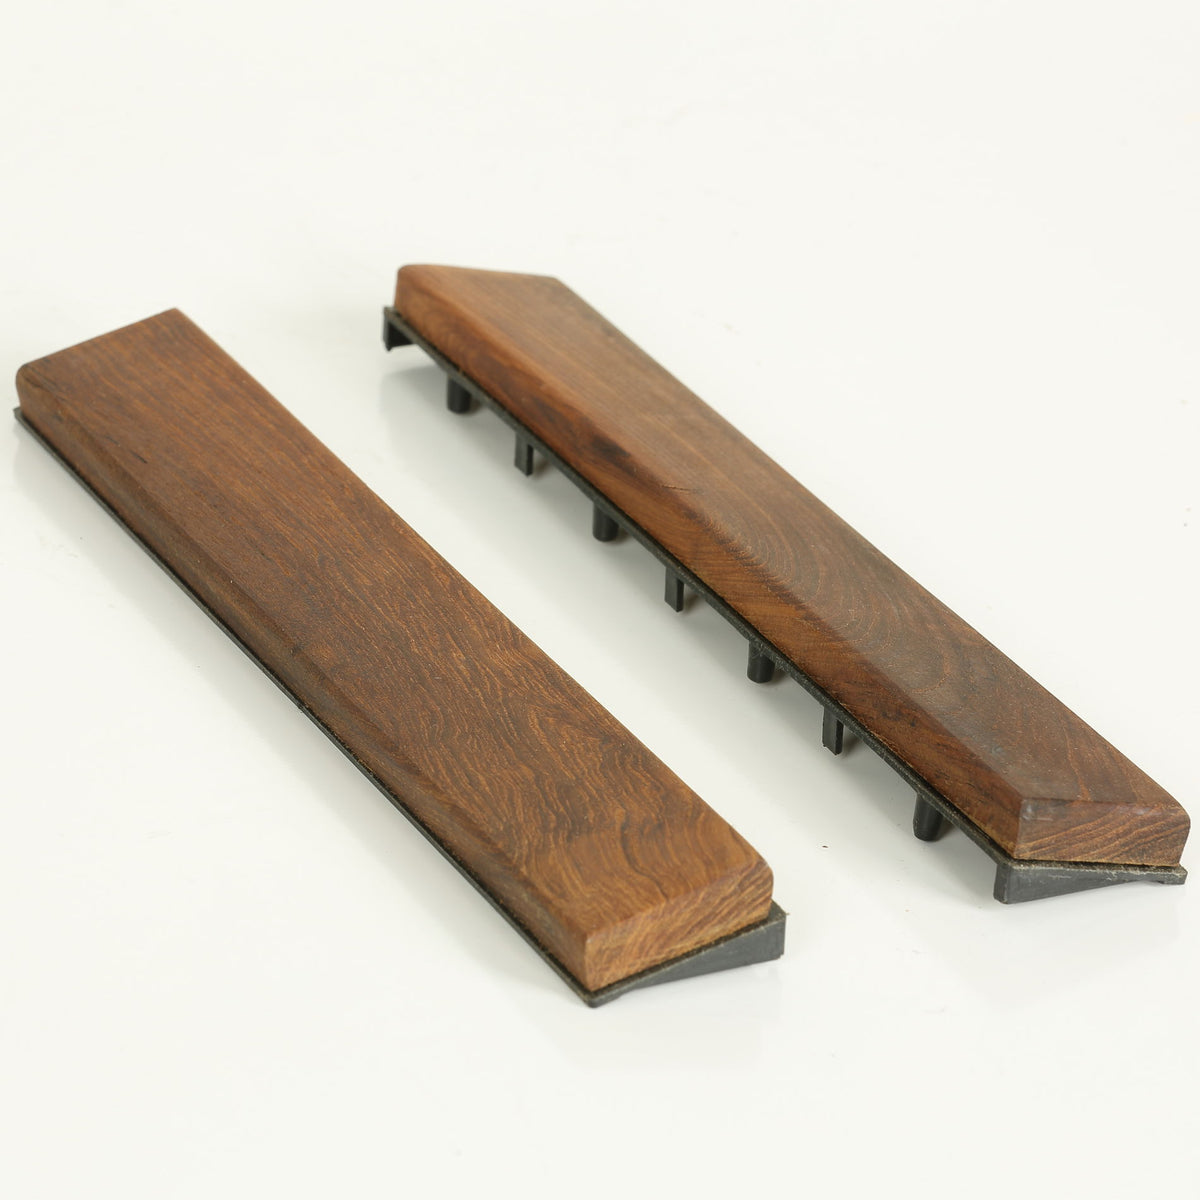 Bare Decor EZ-Floor End Trim Piece Interlocking Flooring in Solid Teak Wood (Set of 2)